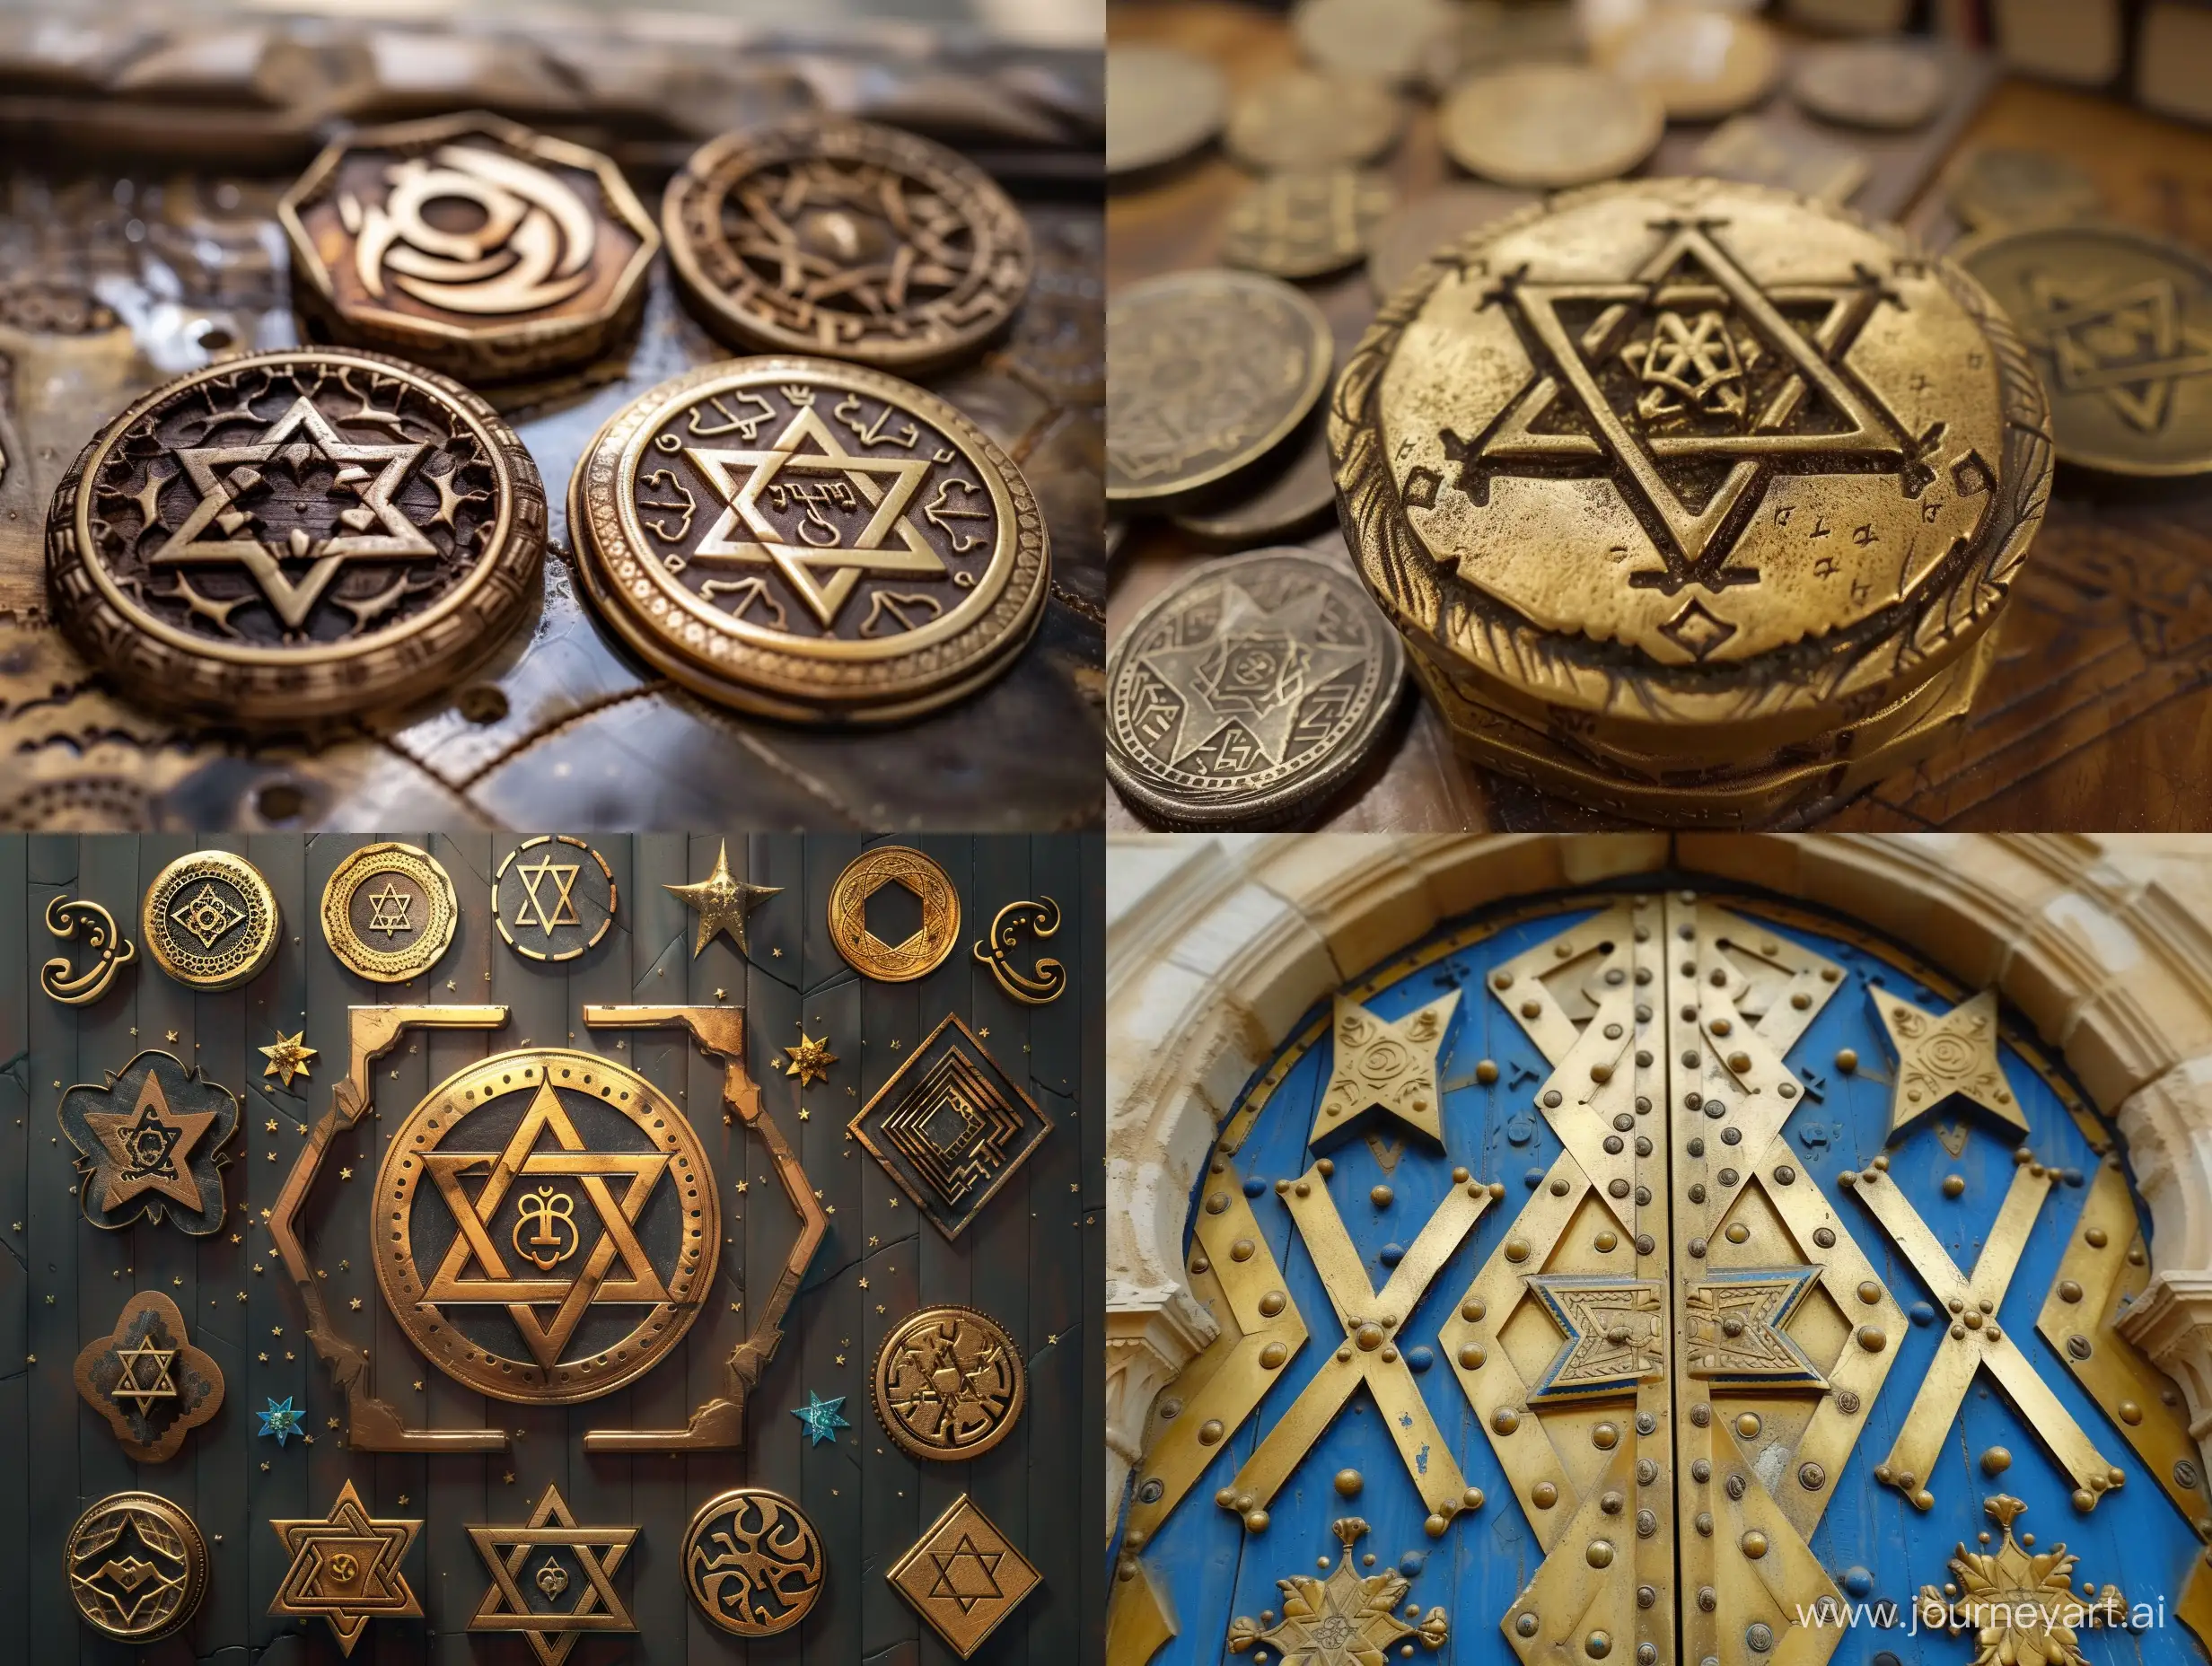 Vibrant-Jewish-Symbols-in-a-43-Aspect-Ratio